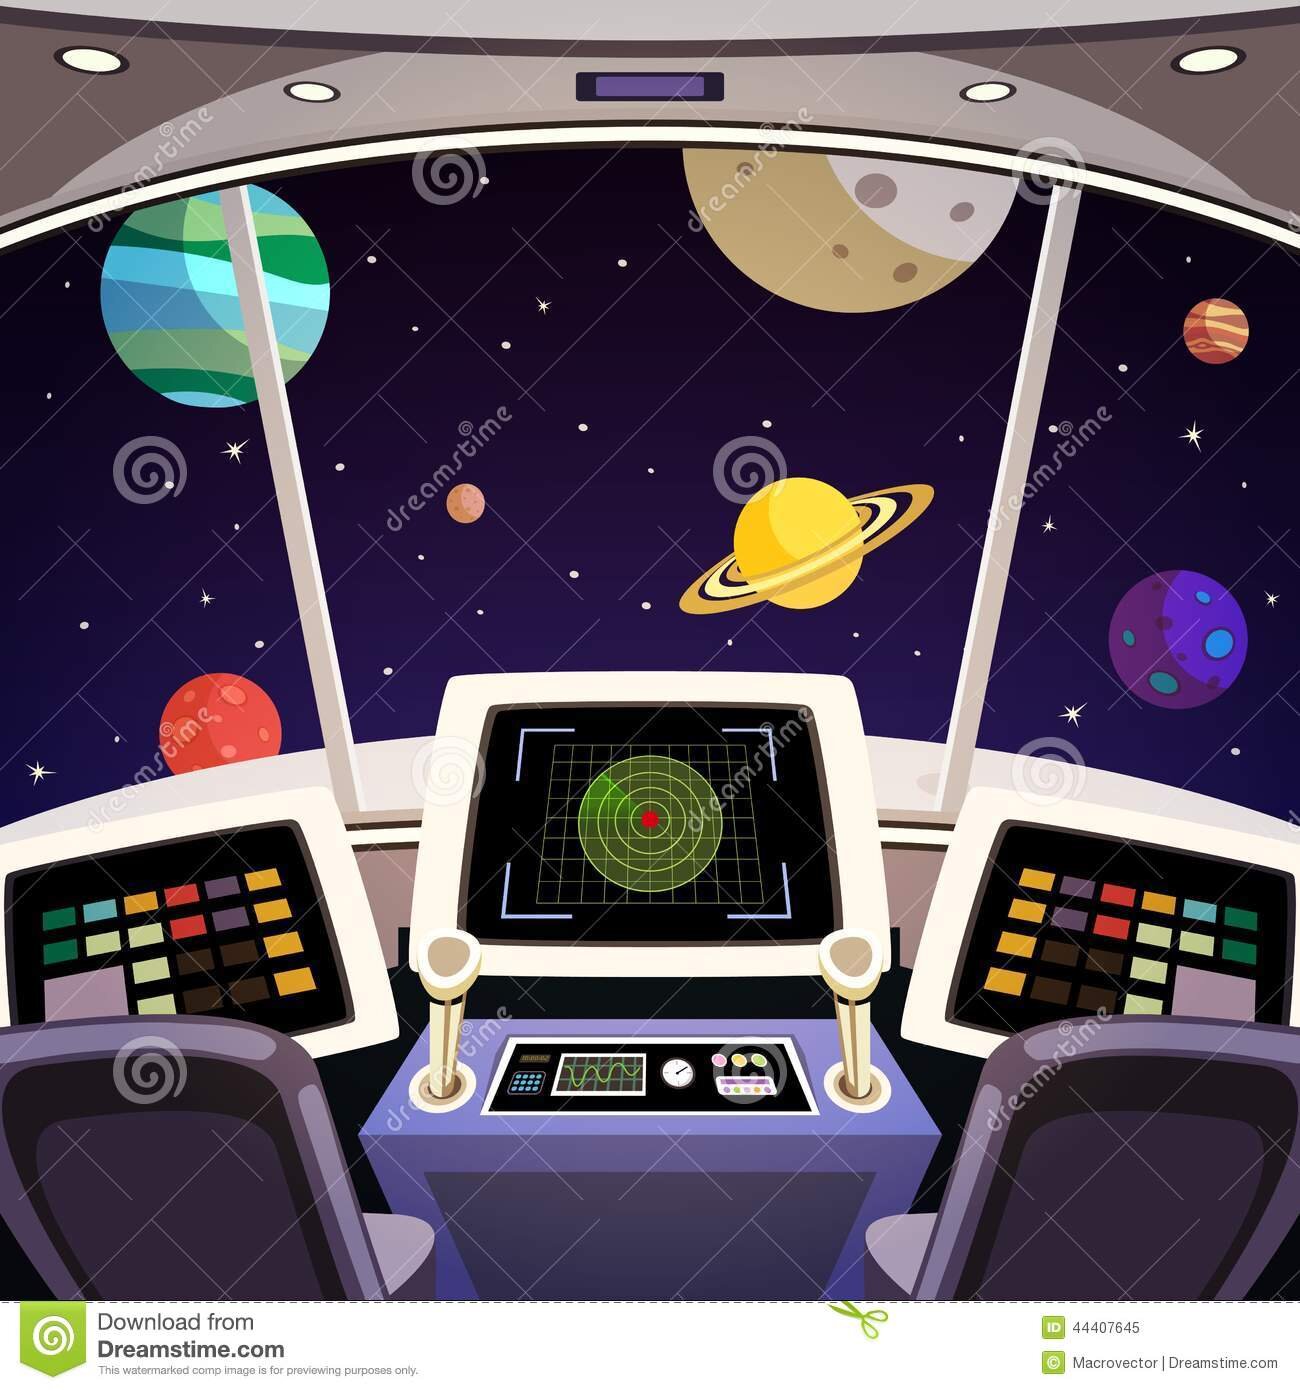 spaceship-cartoon-interior-flying-cabin-futuristic-space-backdrop-vector-illustration-44407645.jpeg